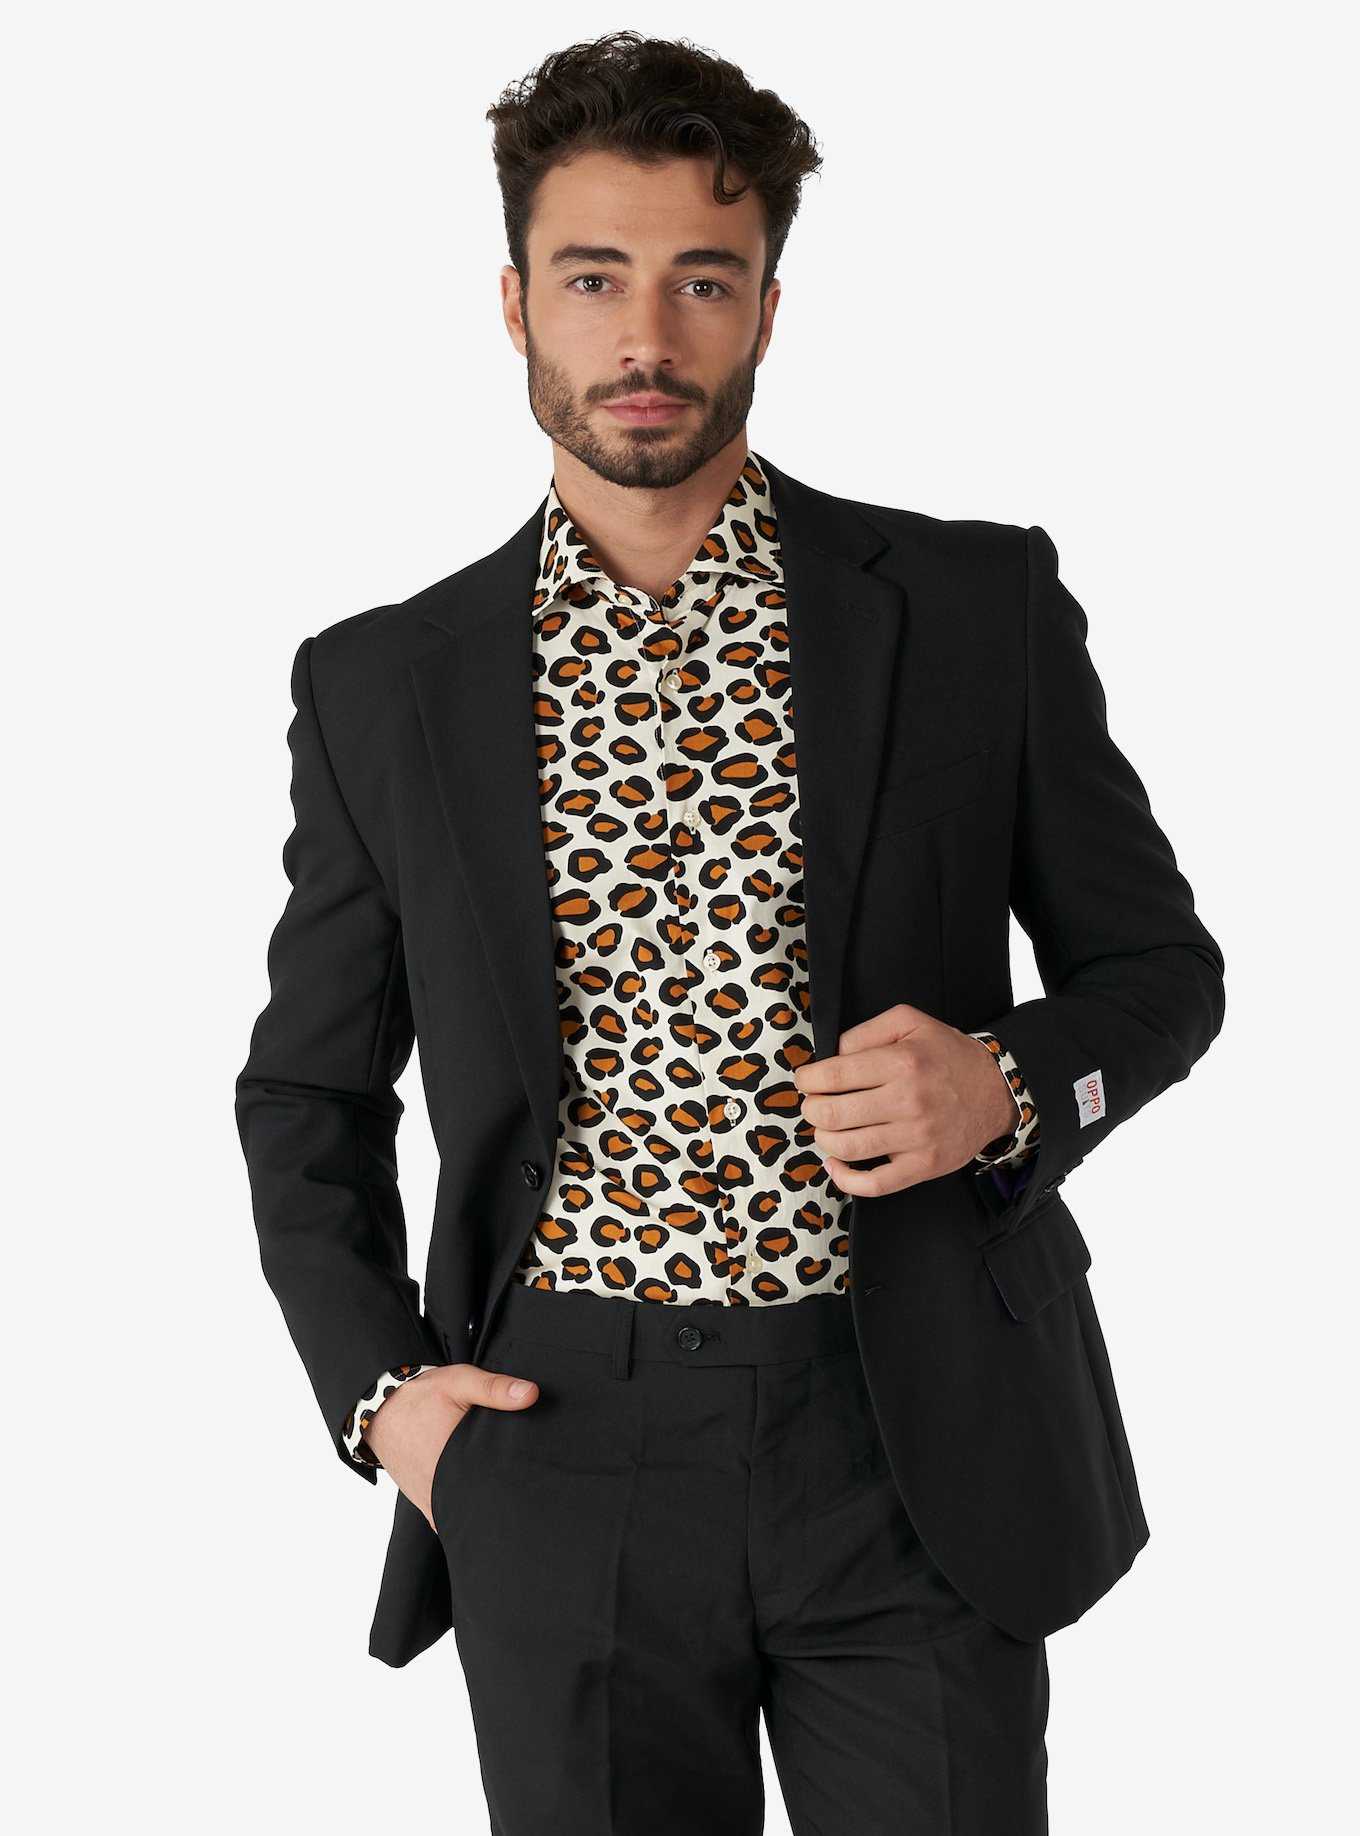 Opposuits Men's The Jag Animal Shirt, , hi-res